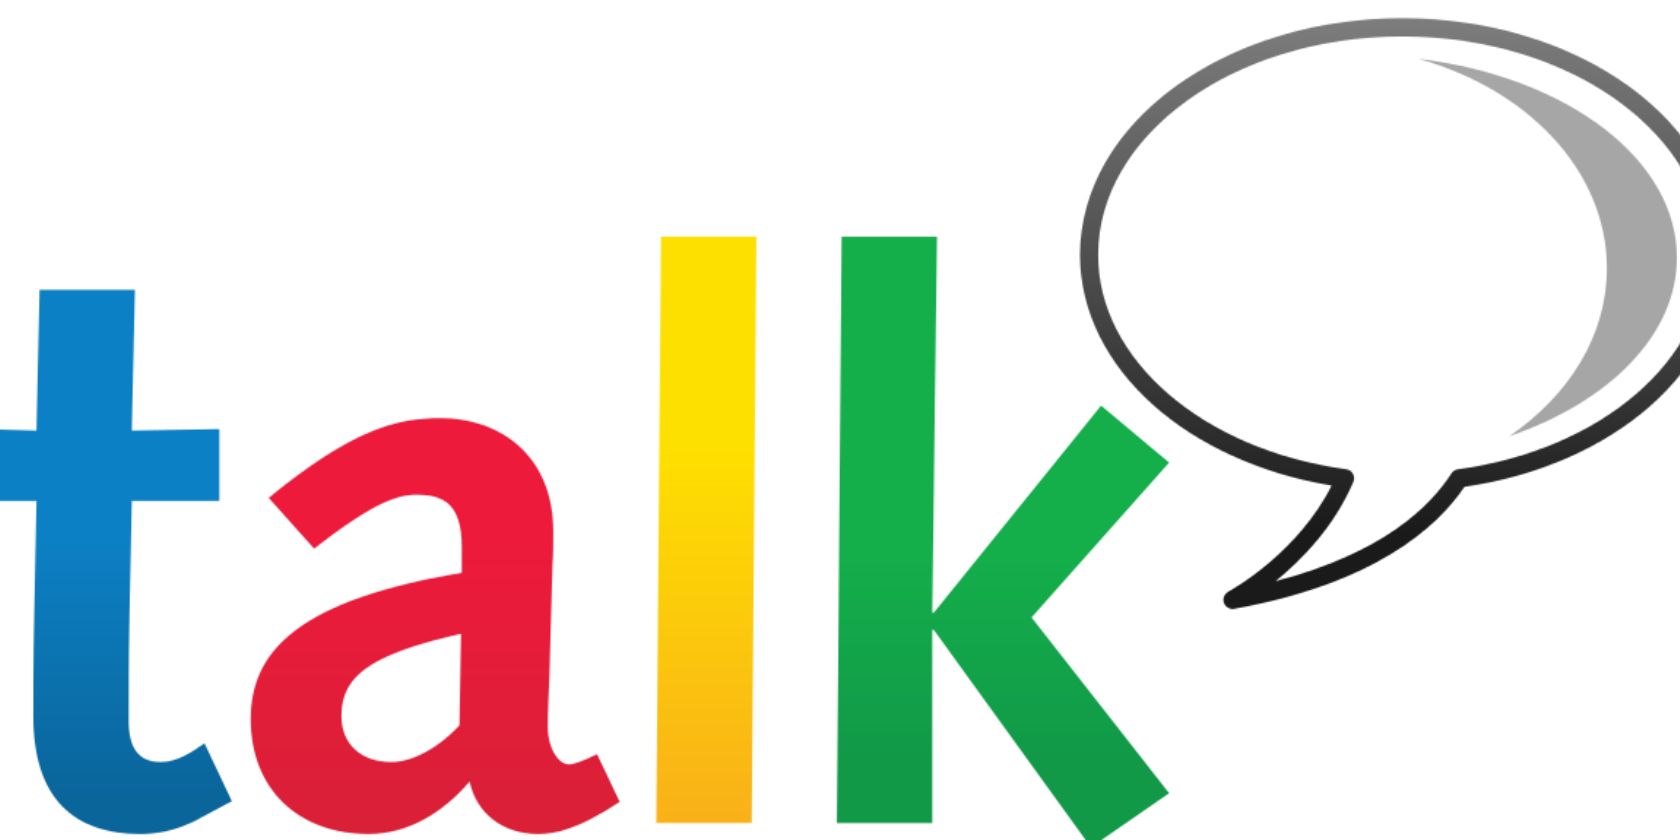 google talk app desktop